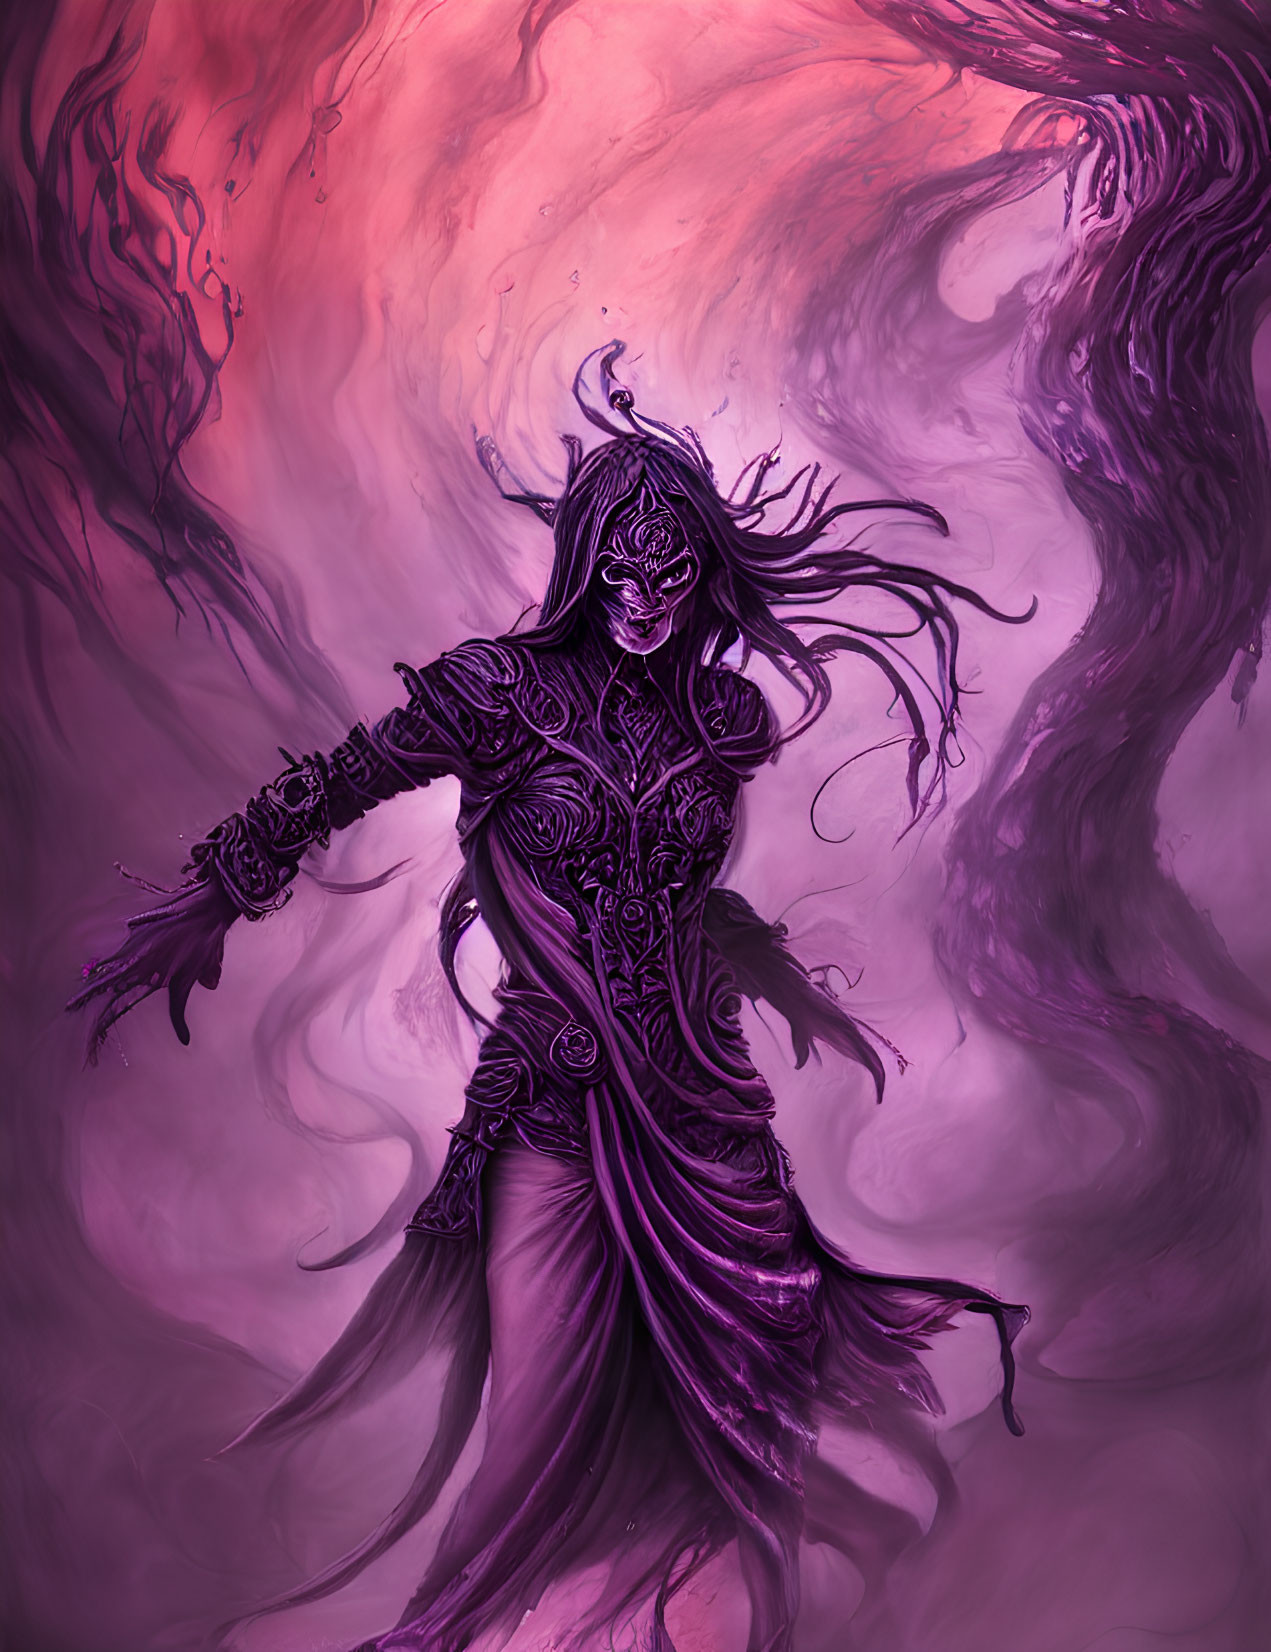 Mystical figure in dark armor under magenta sky with power tendrils